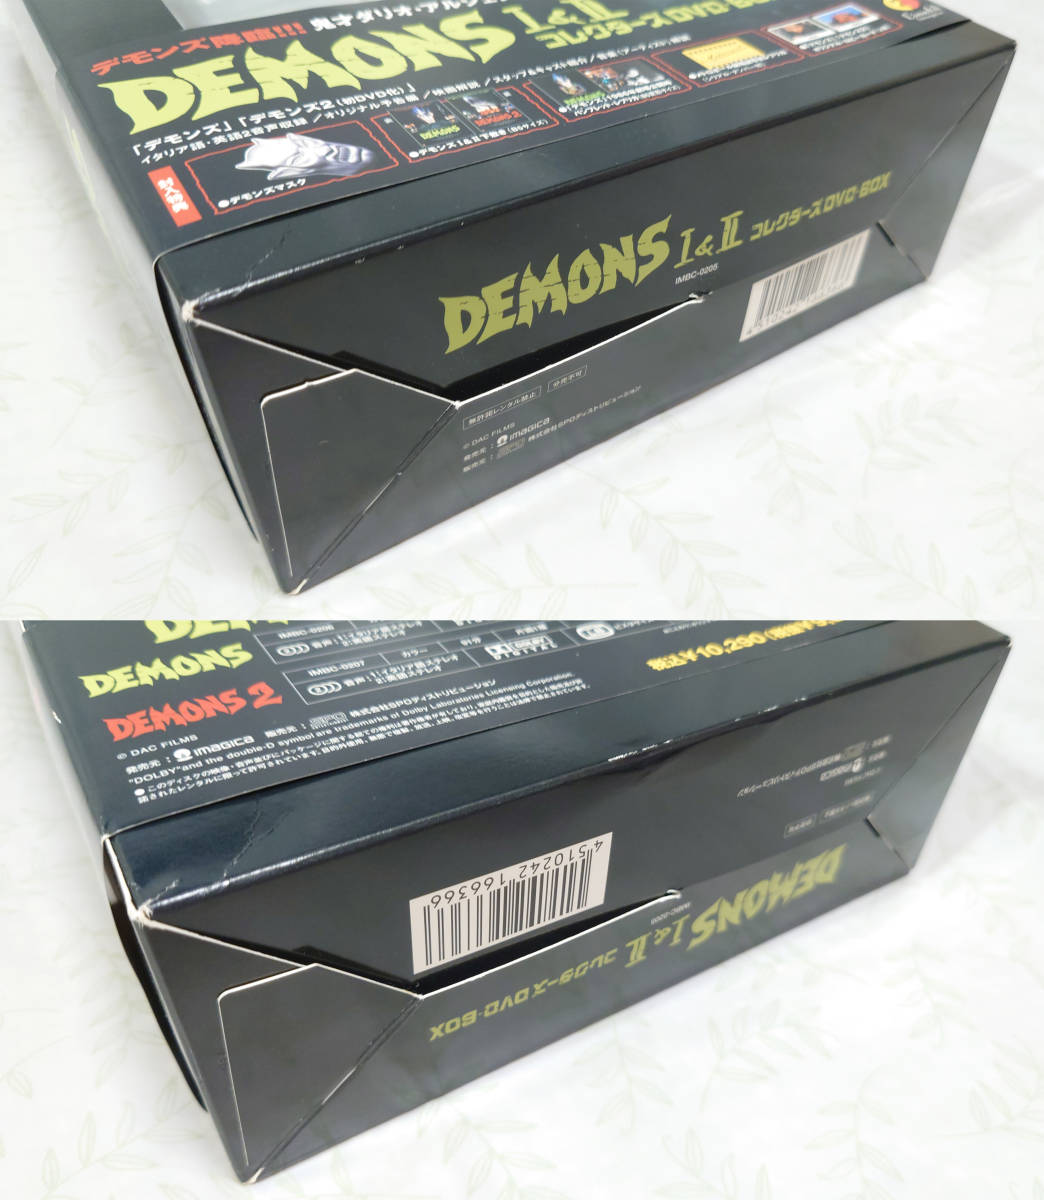 ◆DEMONS I&II コレクターズ DVD-BOX◆初回限定生産 特典付◆デモンズ2本組◆ダリオ・アルジェント